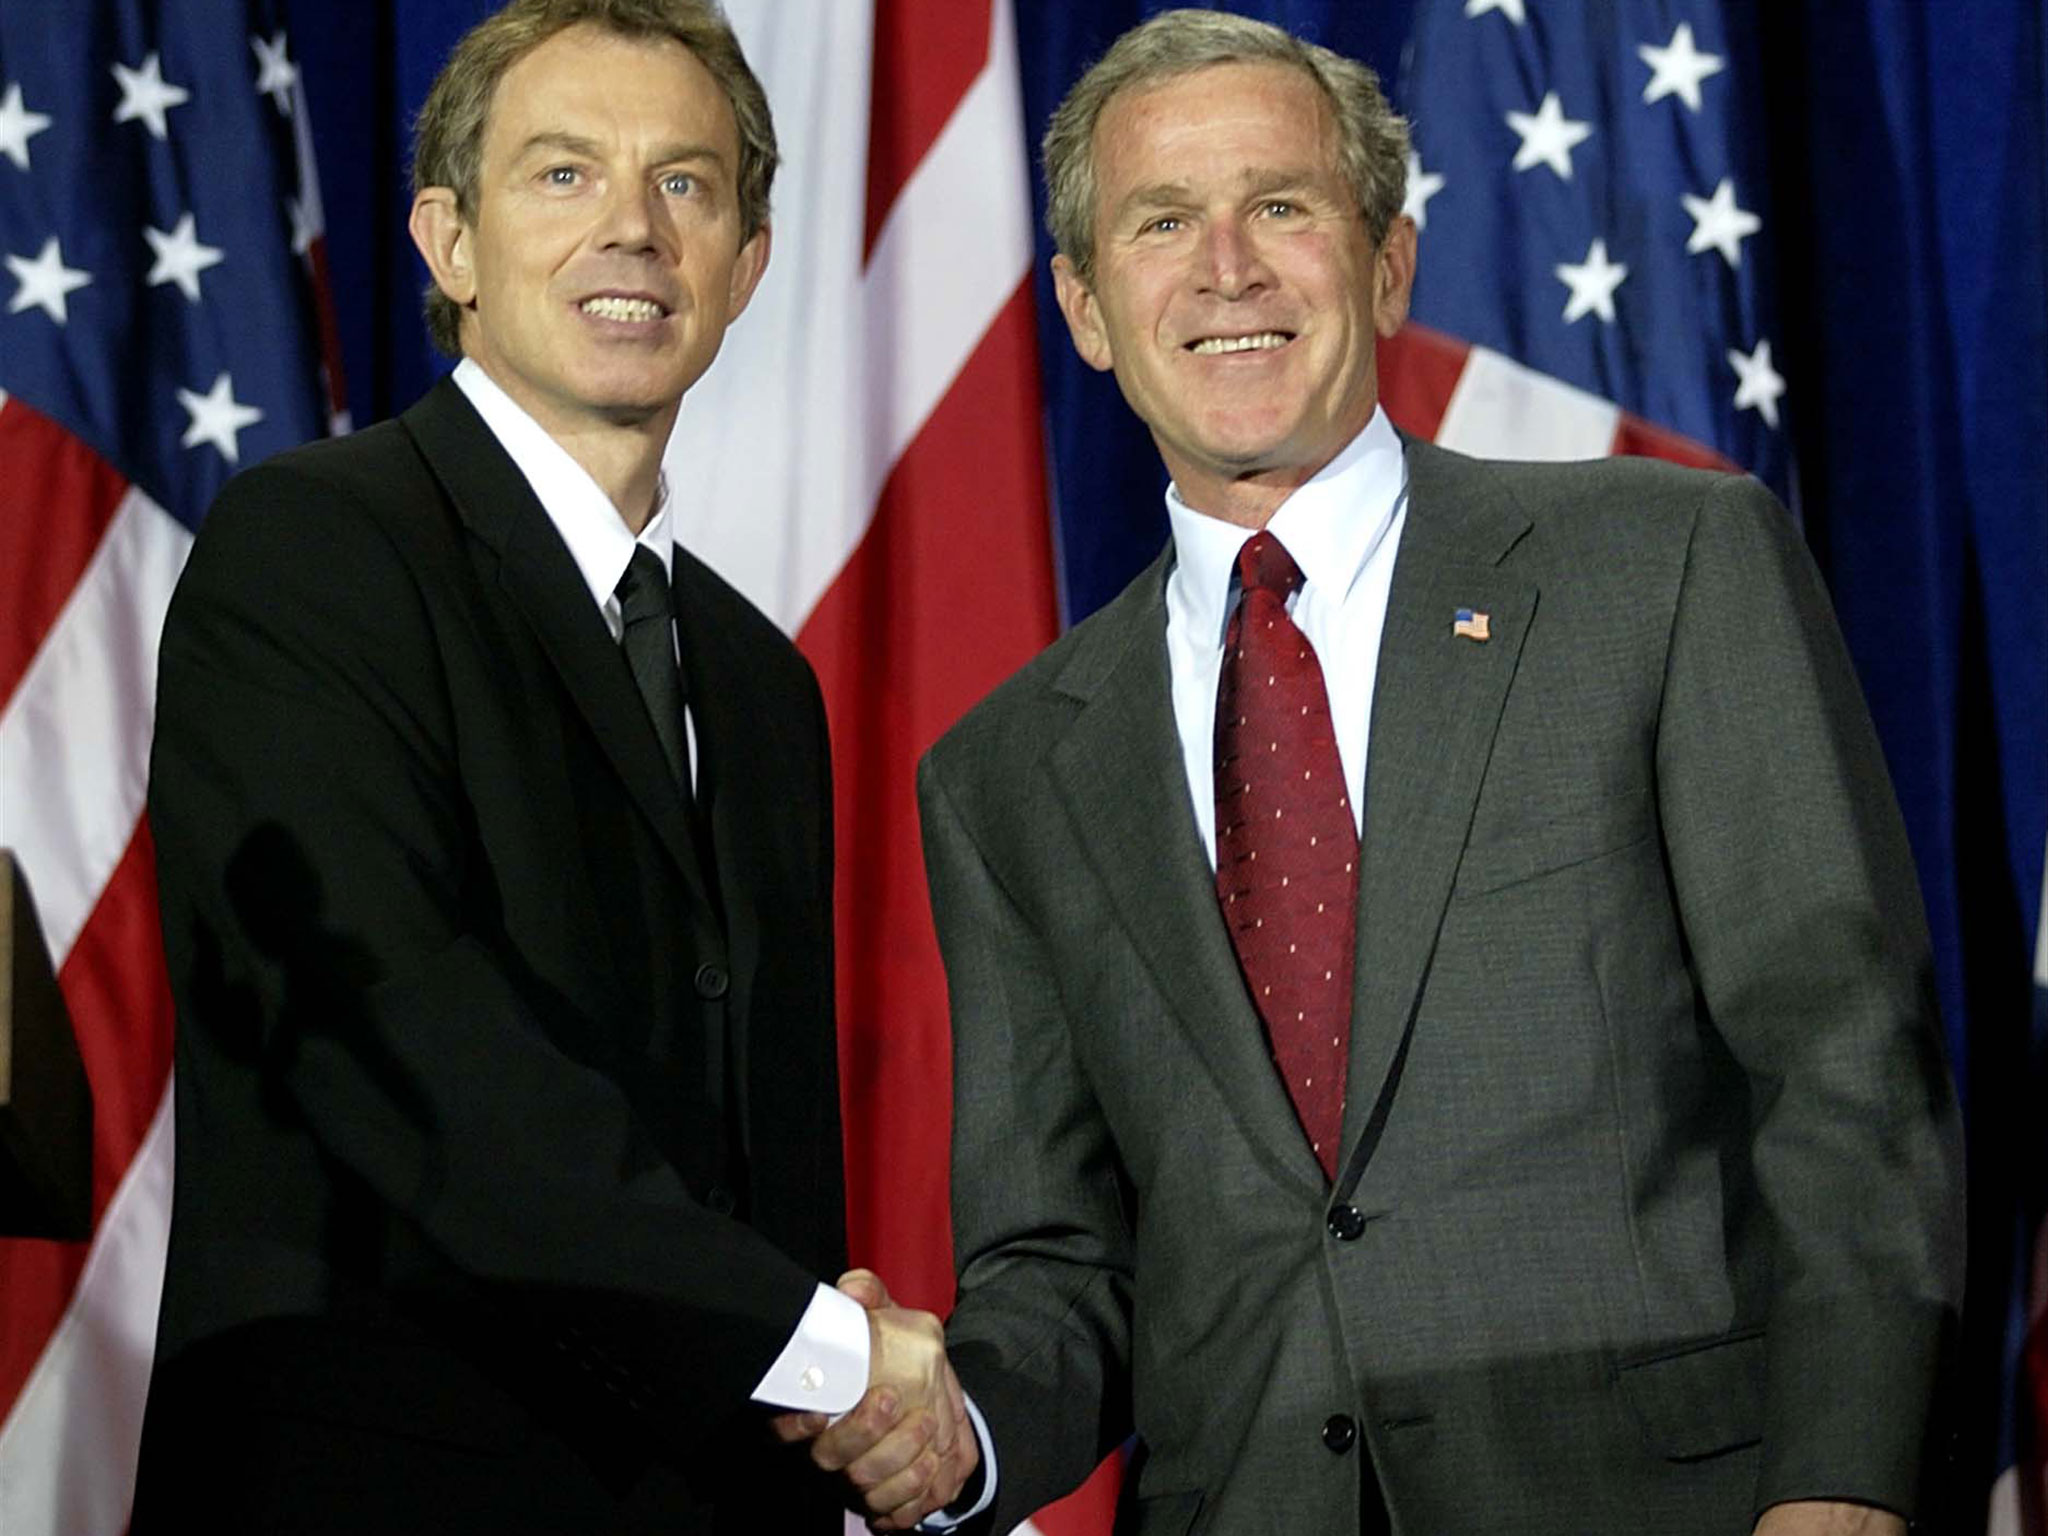 Iraq War report: Key lines from the Blair-Bush memos